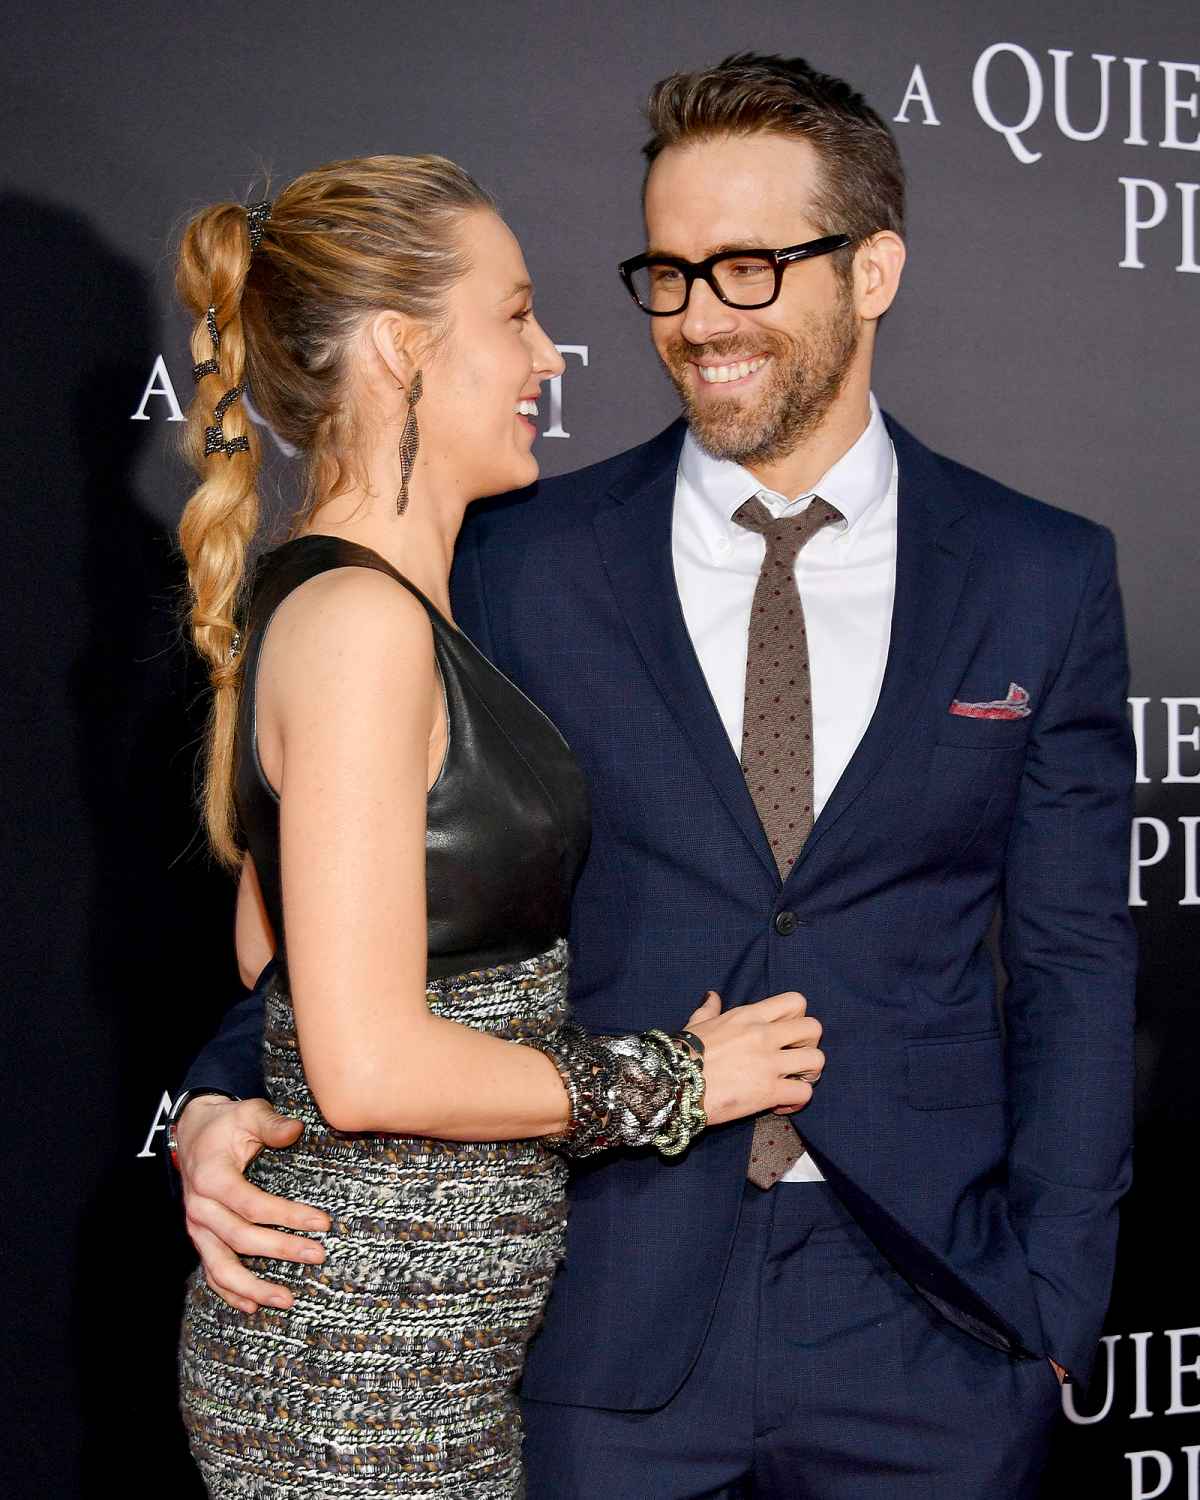 Blake Lively Threesome Porn - Blake Lively and Ryan Reynolds' Relationship Timeline